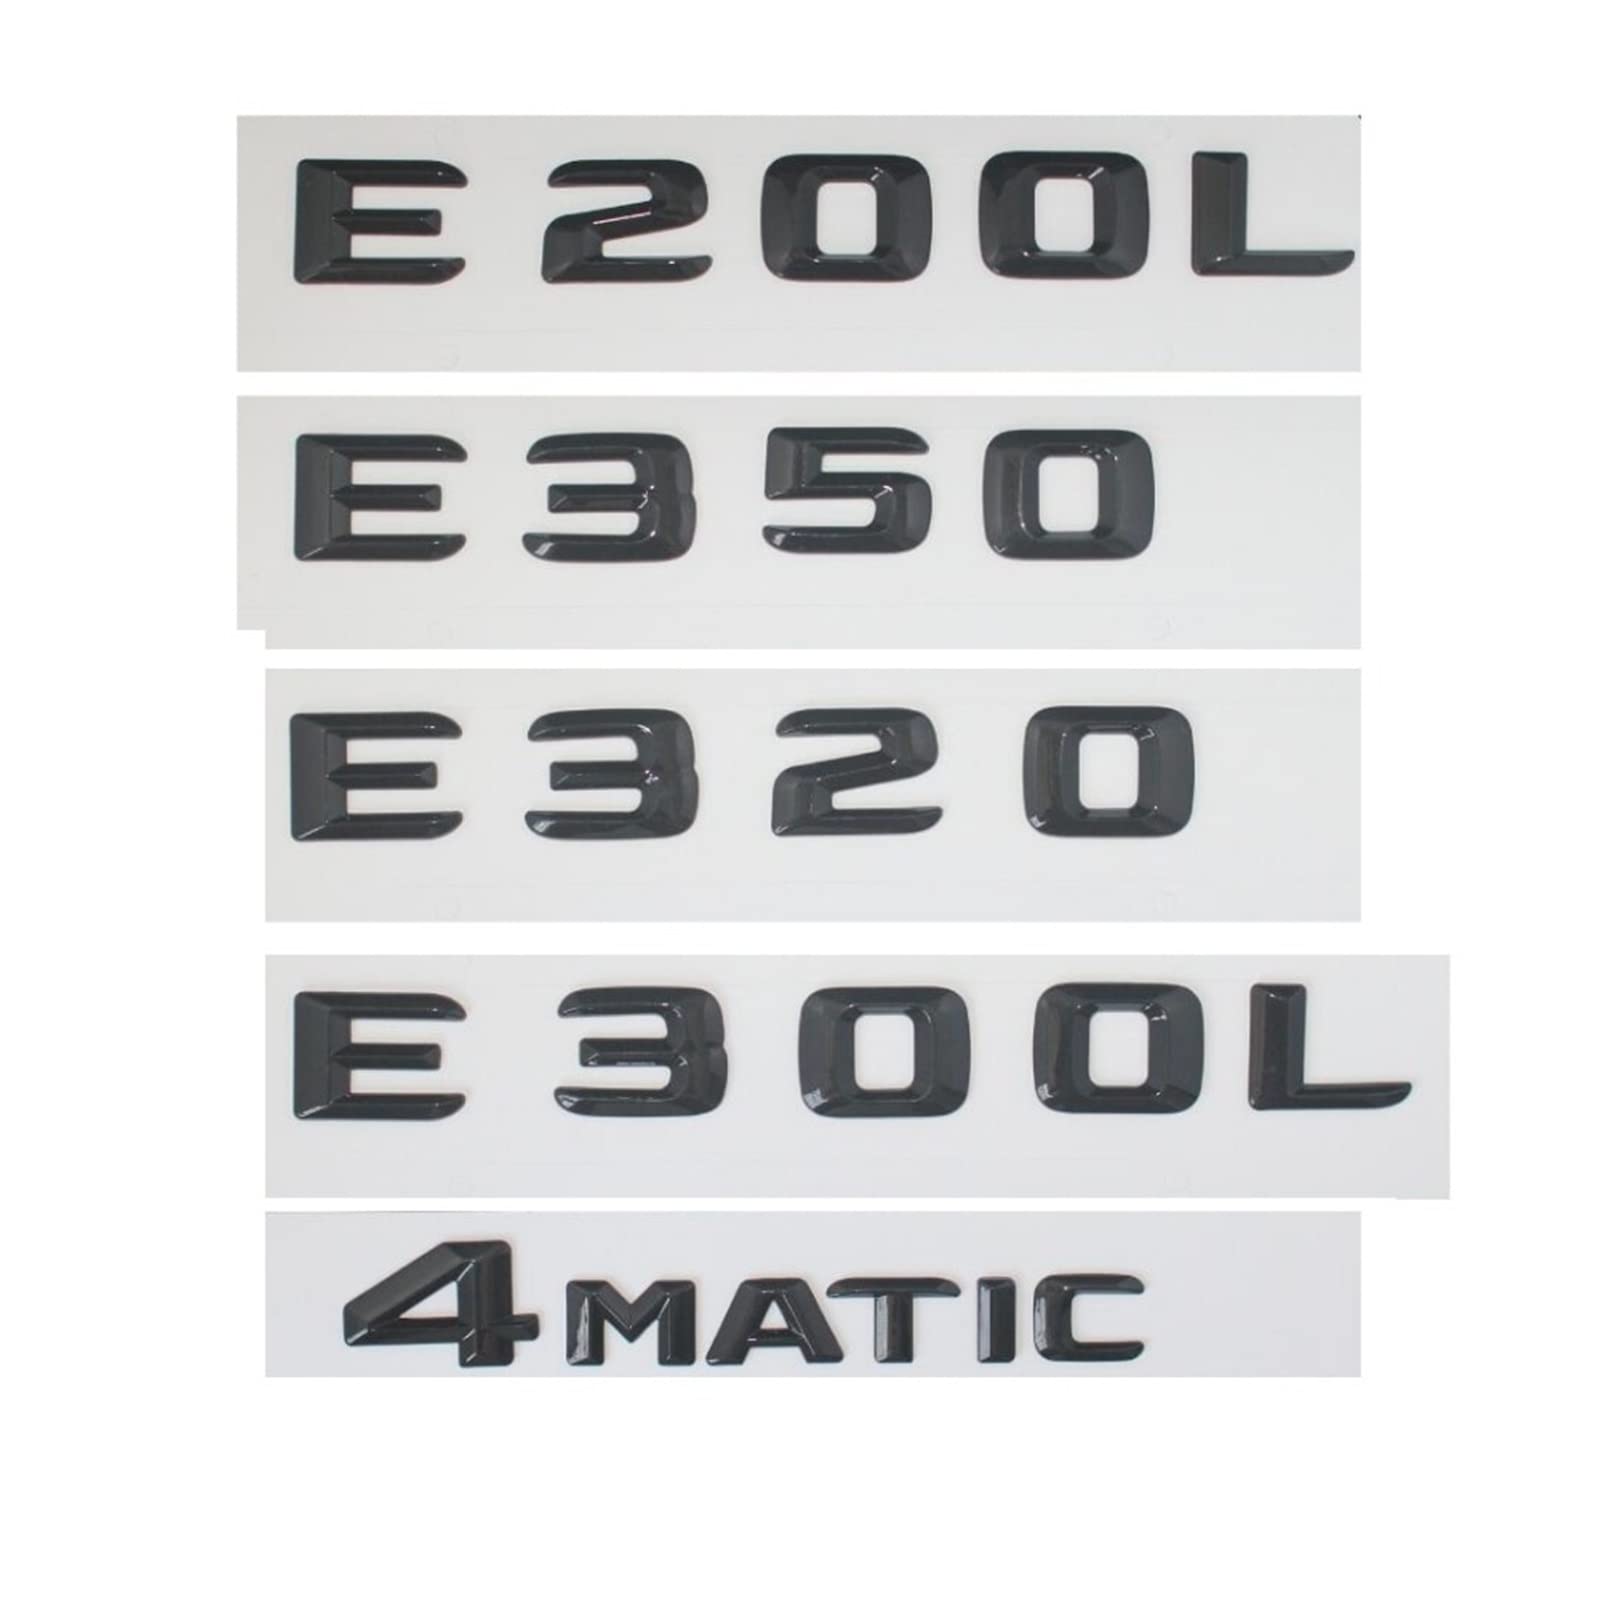 LHYFAGQK Glänzend Schwarze Stammbuchstaben-Abzeichen-Emblem, passend for E43 E63 E55 AMG E320 E350 E300 E200 E400 E500 E250 E550 E420 4MATIC Abzeichen Autoaufkleber(E200L) von LHYFAGQK